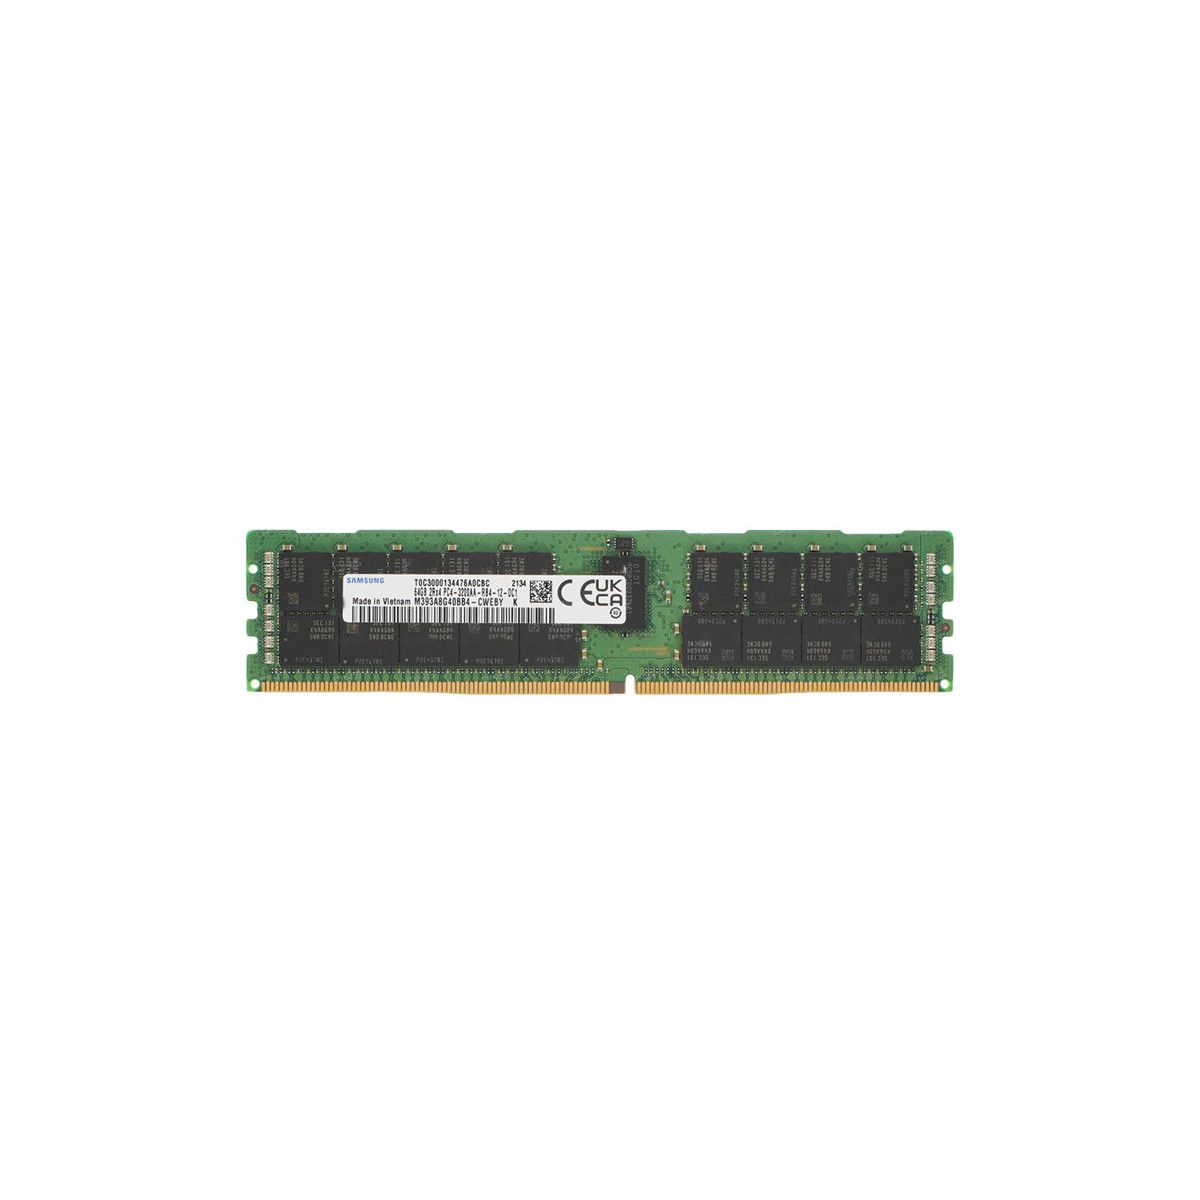 370-AEVP-MS - Memstar 1x 64GB DDR4-3200 RDIMM PC4-25600R - Mem-Star OEM compatibile Memoria 1 - Memstar 